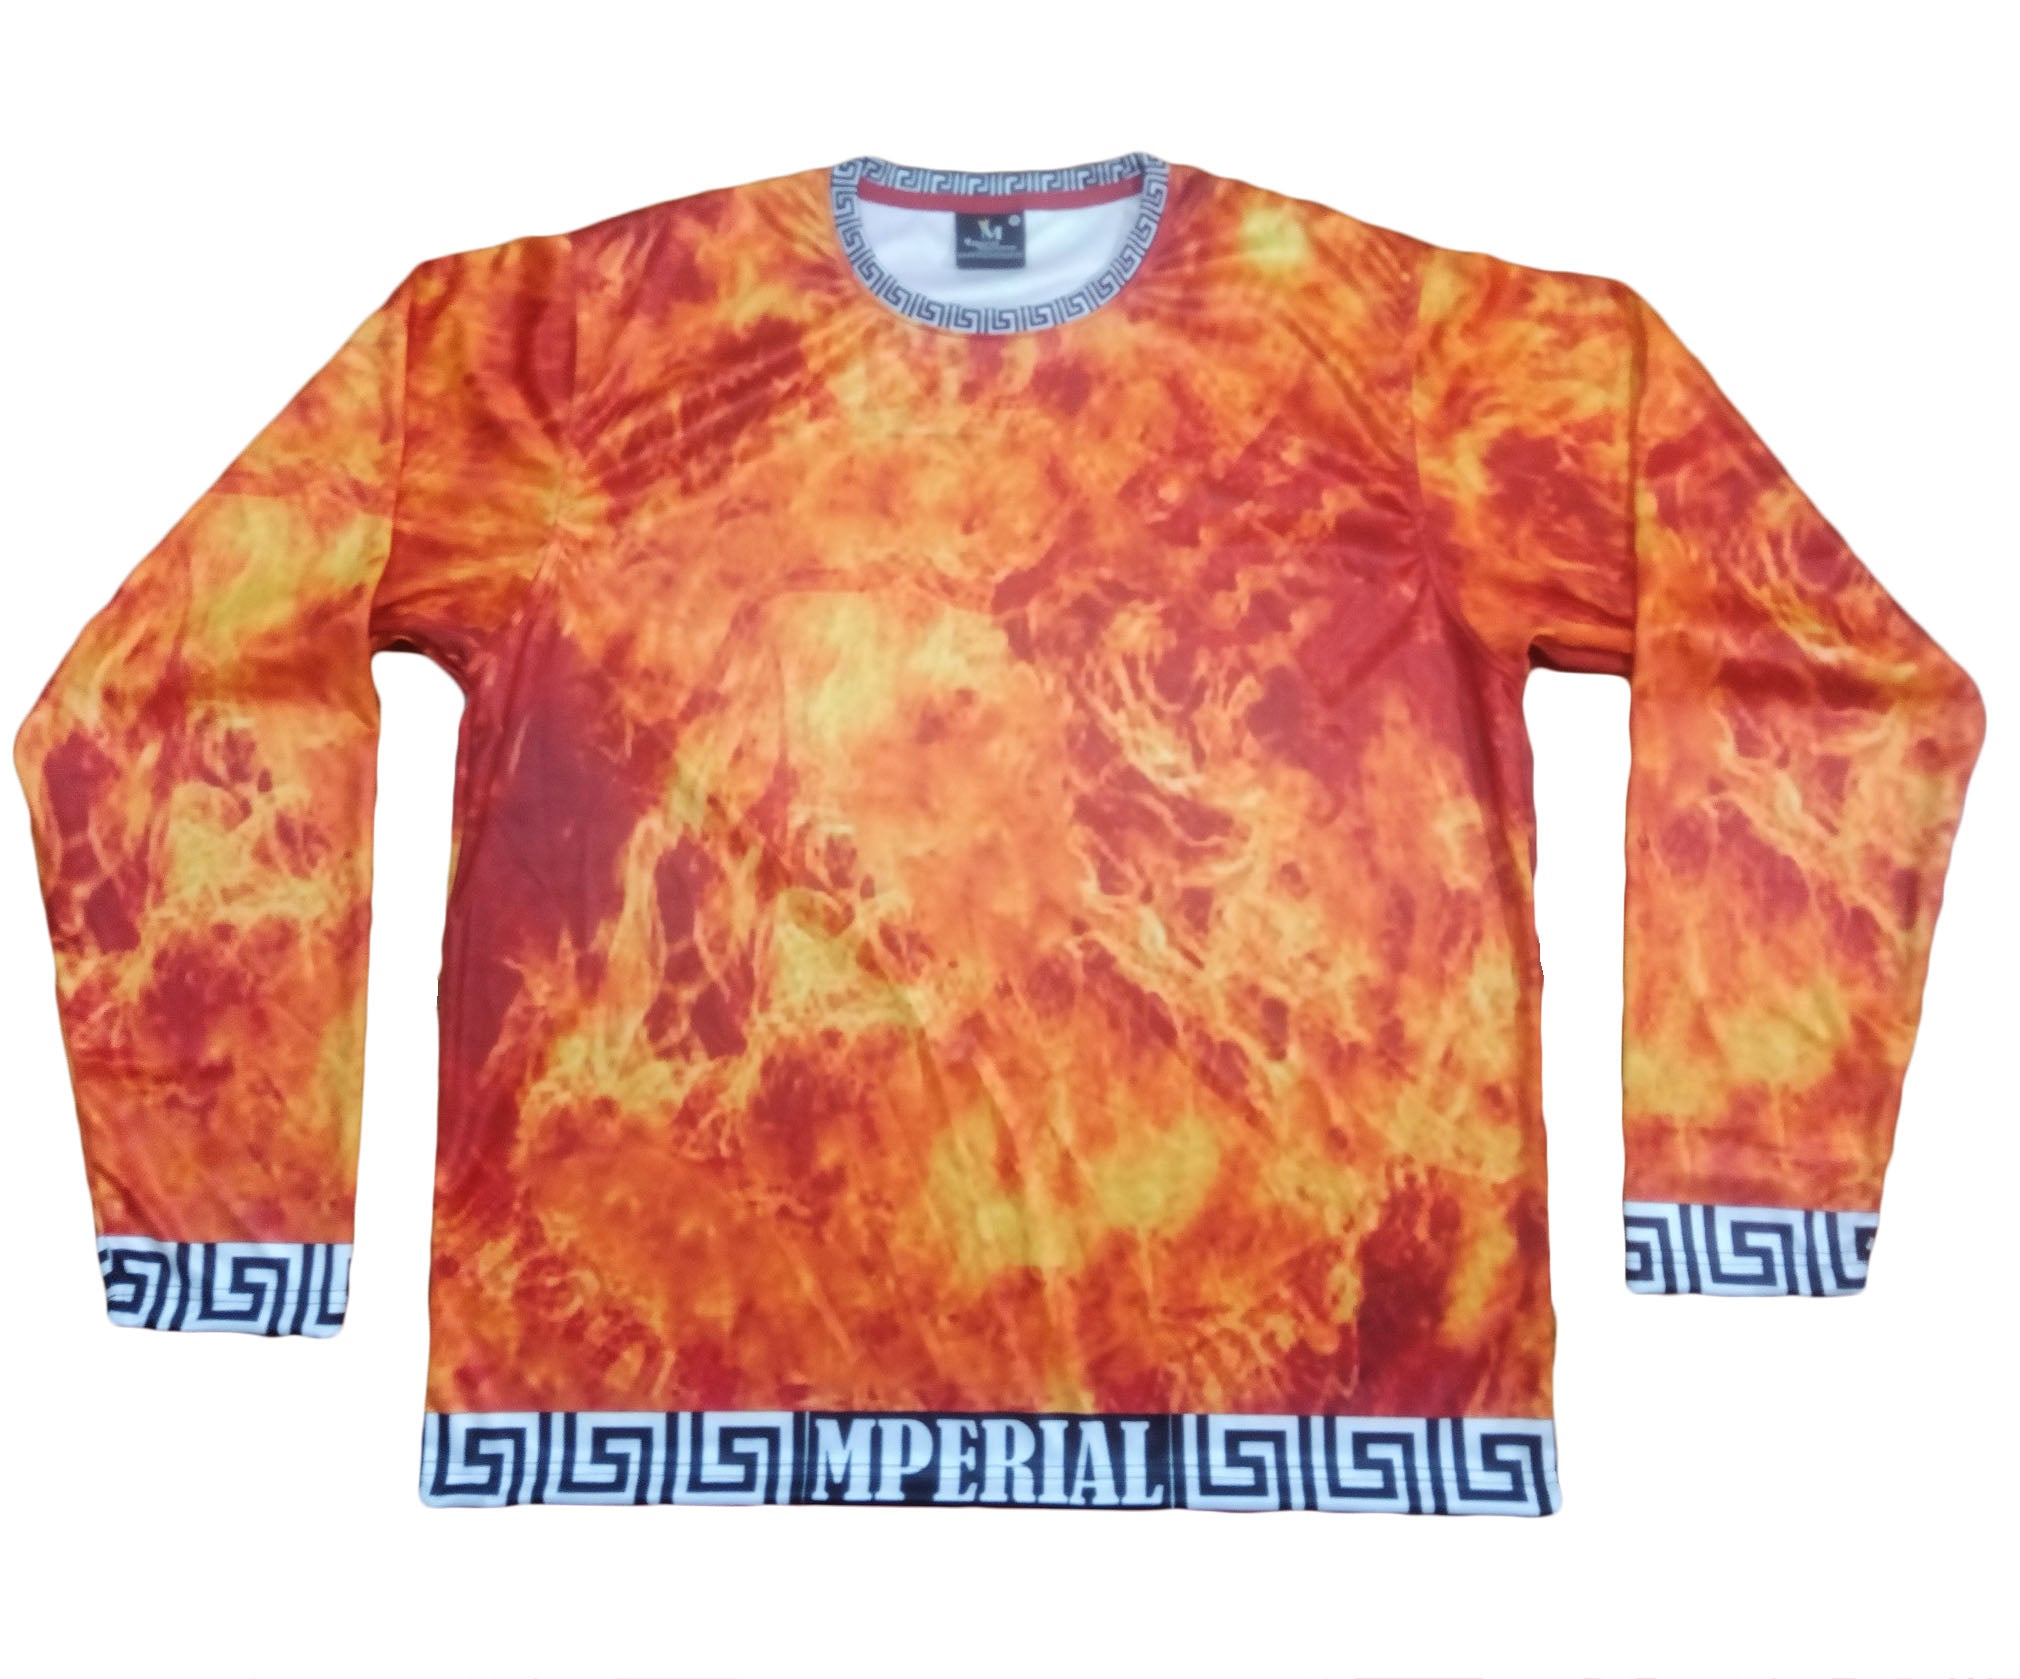 Mperial Flames Full Sleeve Shirt